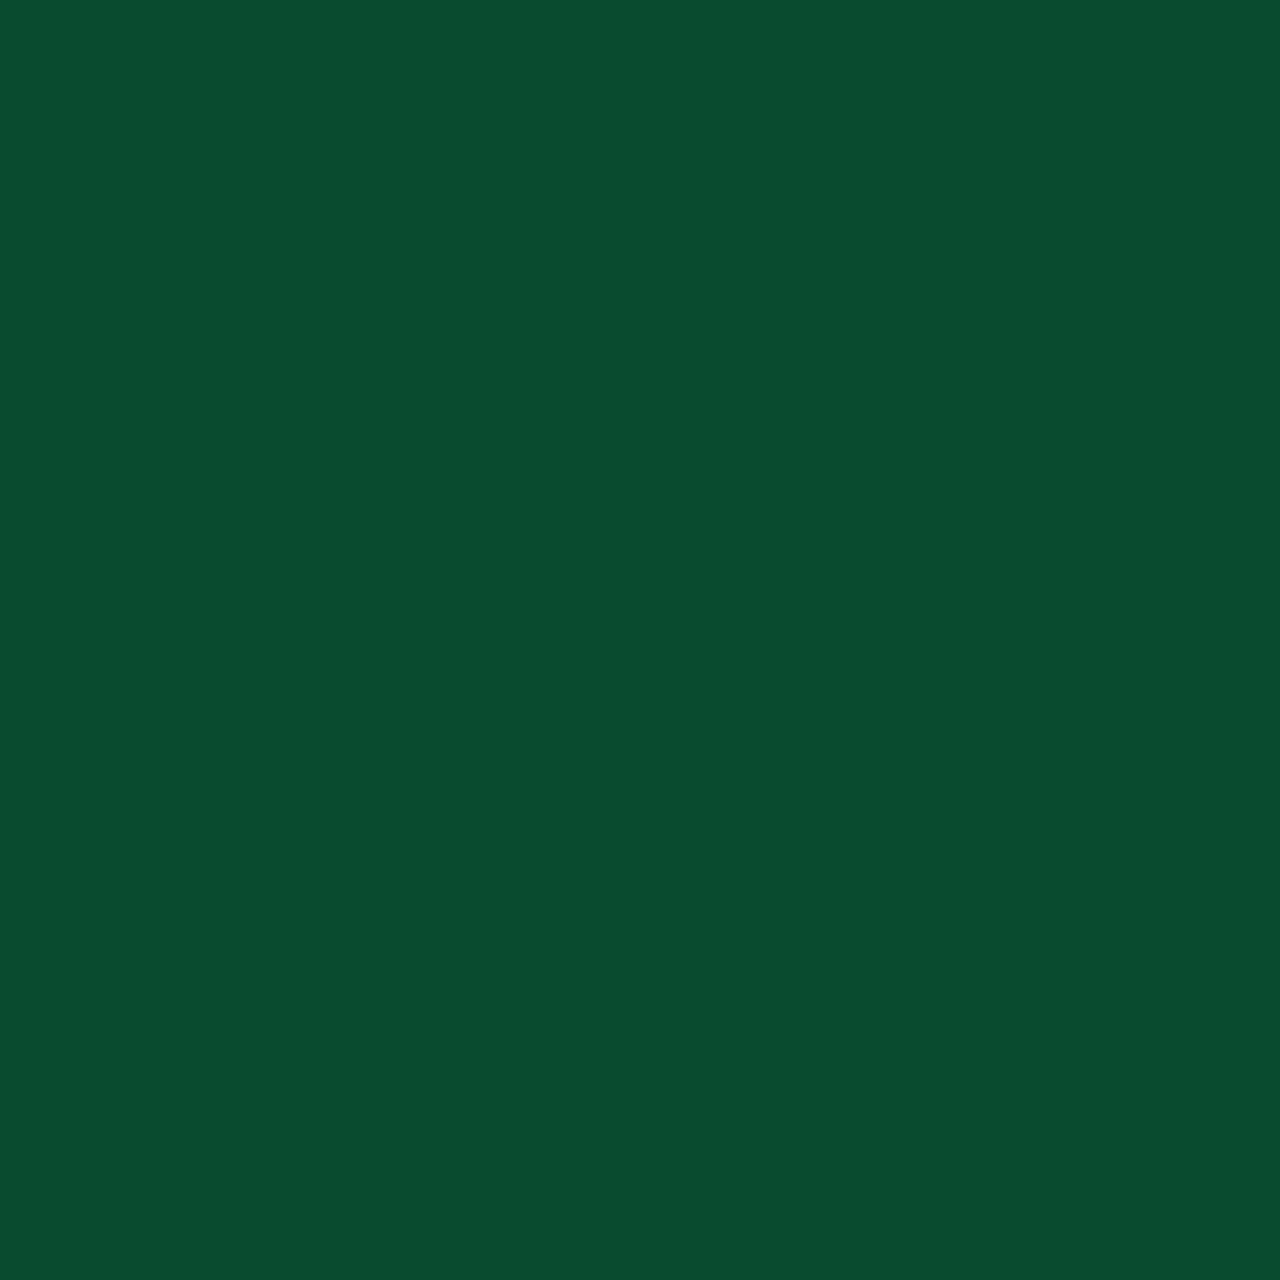 Angelus Acrylic Leather Paint, 1 oz, Midnight Green